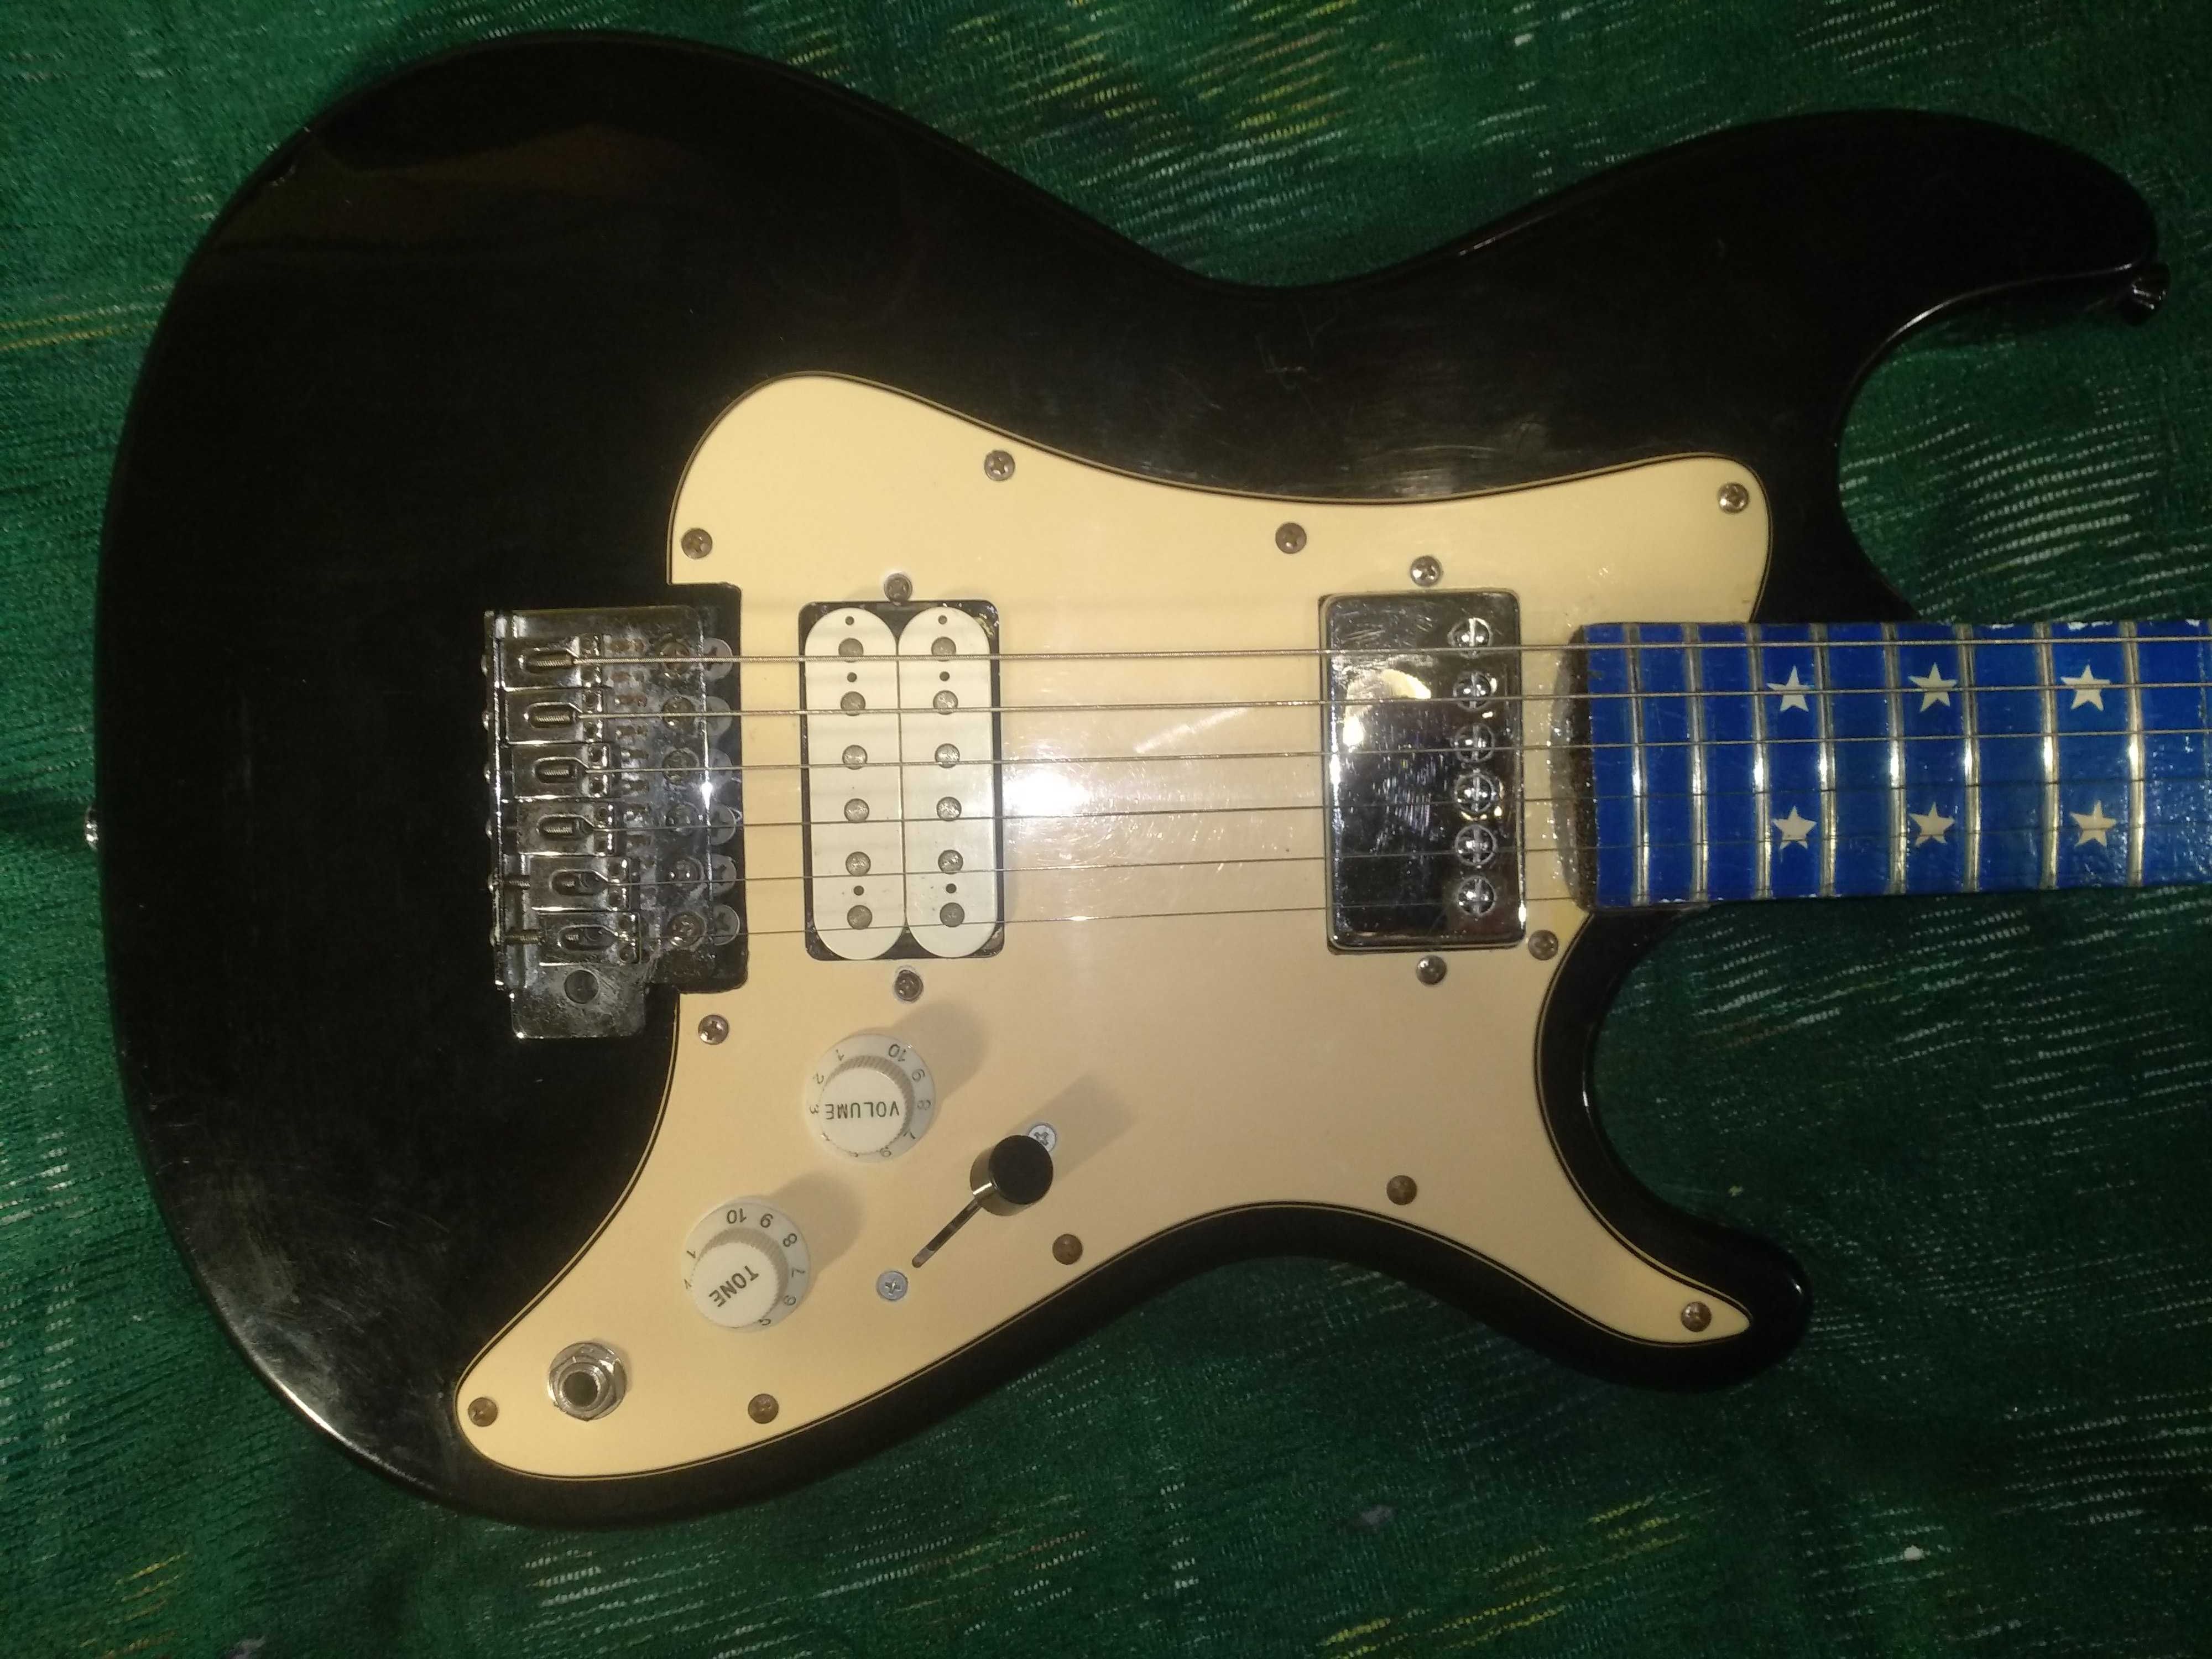 Электро гитара Fender-Cort TeleStrat Mod яркий эксклюзив. Обмен